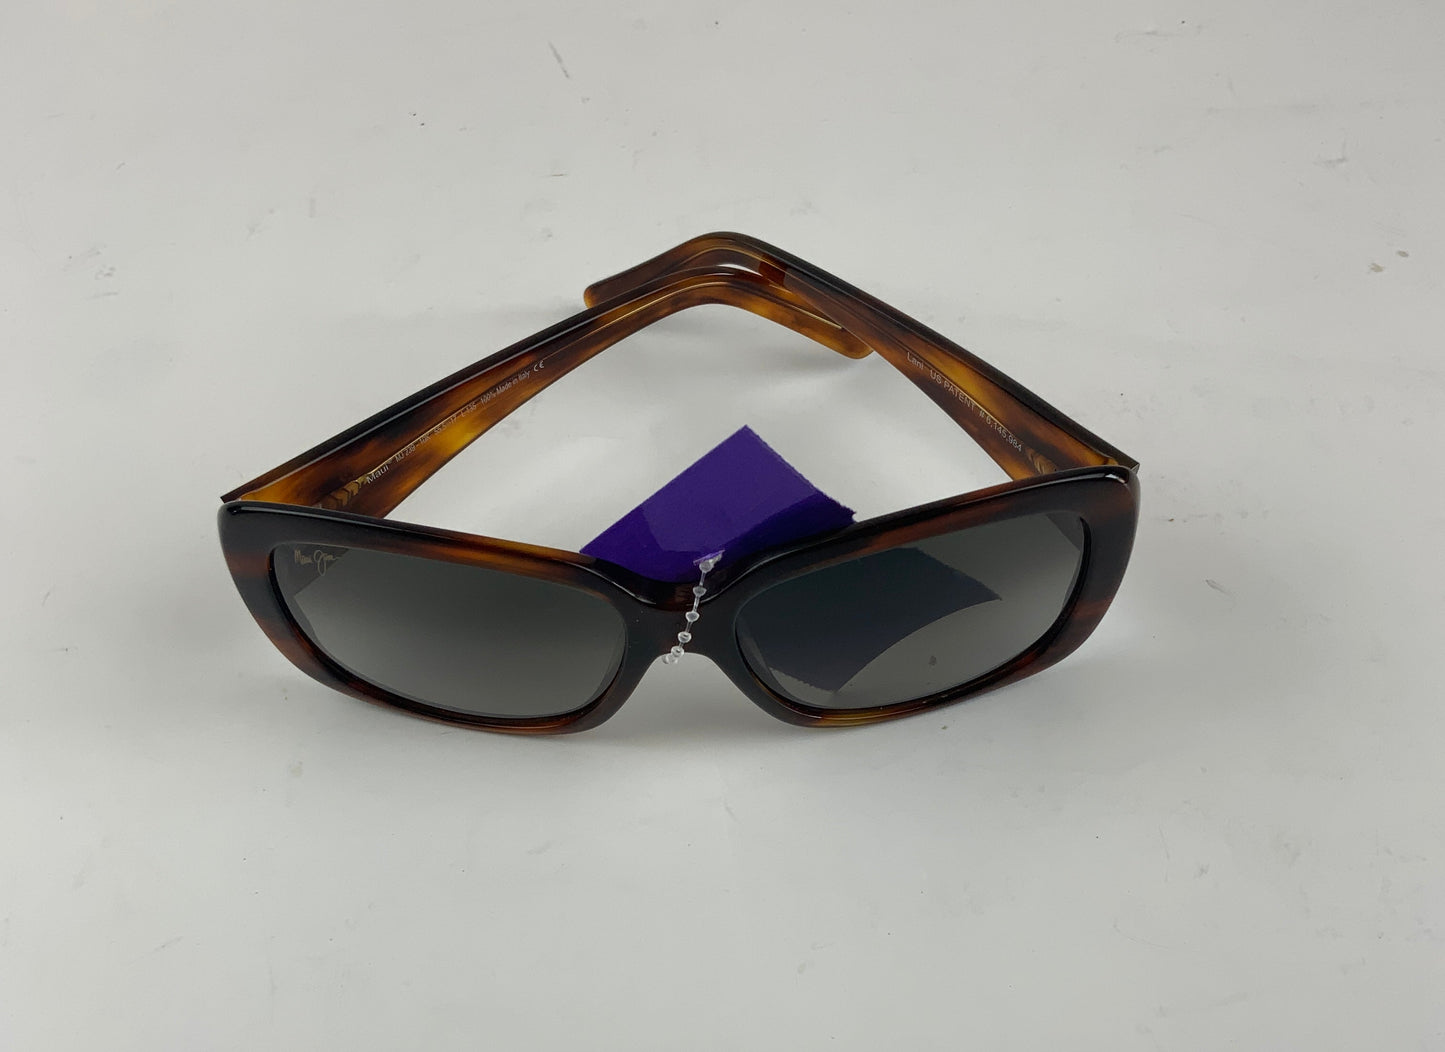 Sunglasses Designer Maui Jim